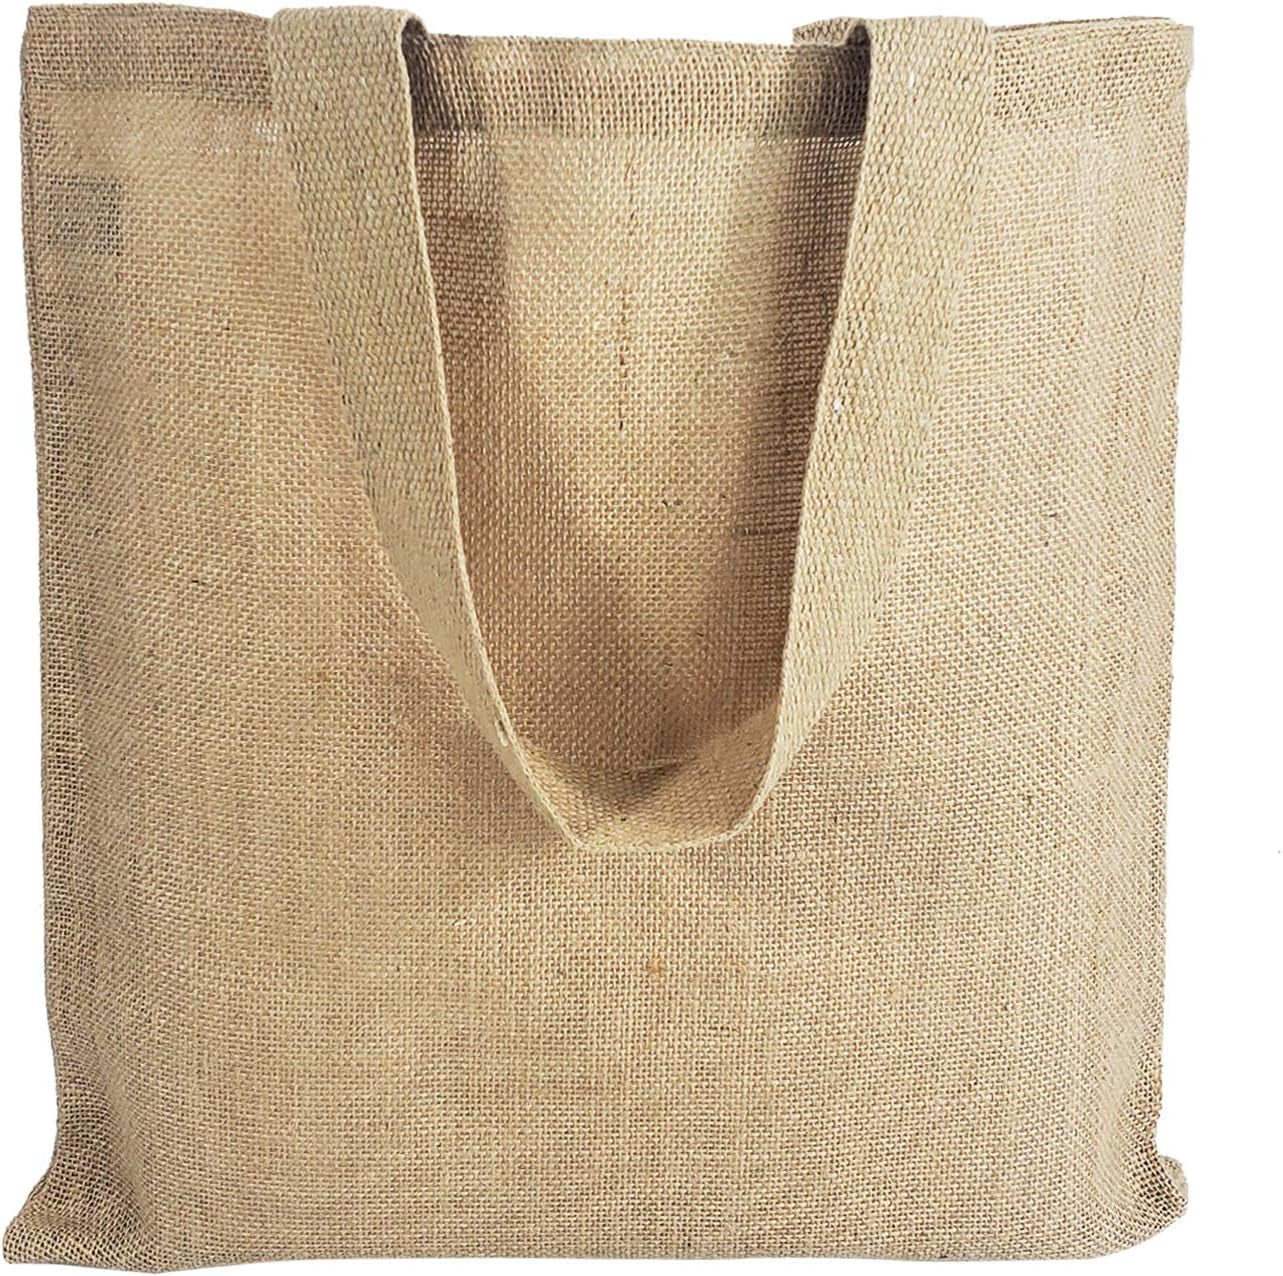 Jute Burlap Tote Bags 15"W X 16"H - Pack of 6 and 12 - Eco-Friendly Bulk Shopping Bags